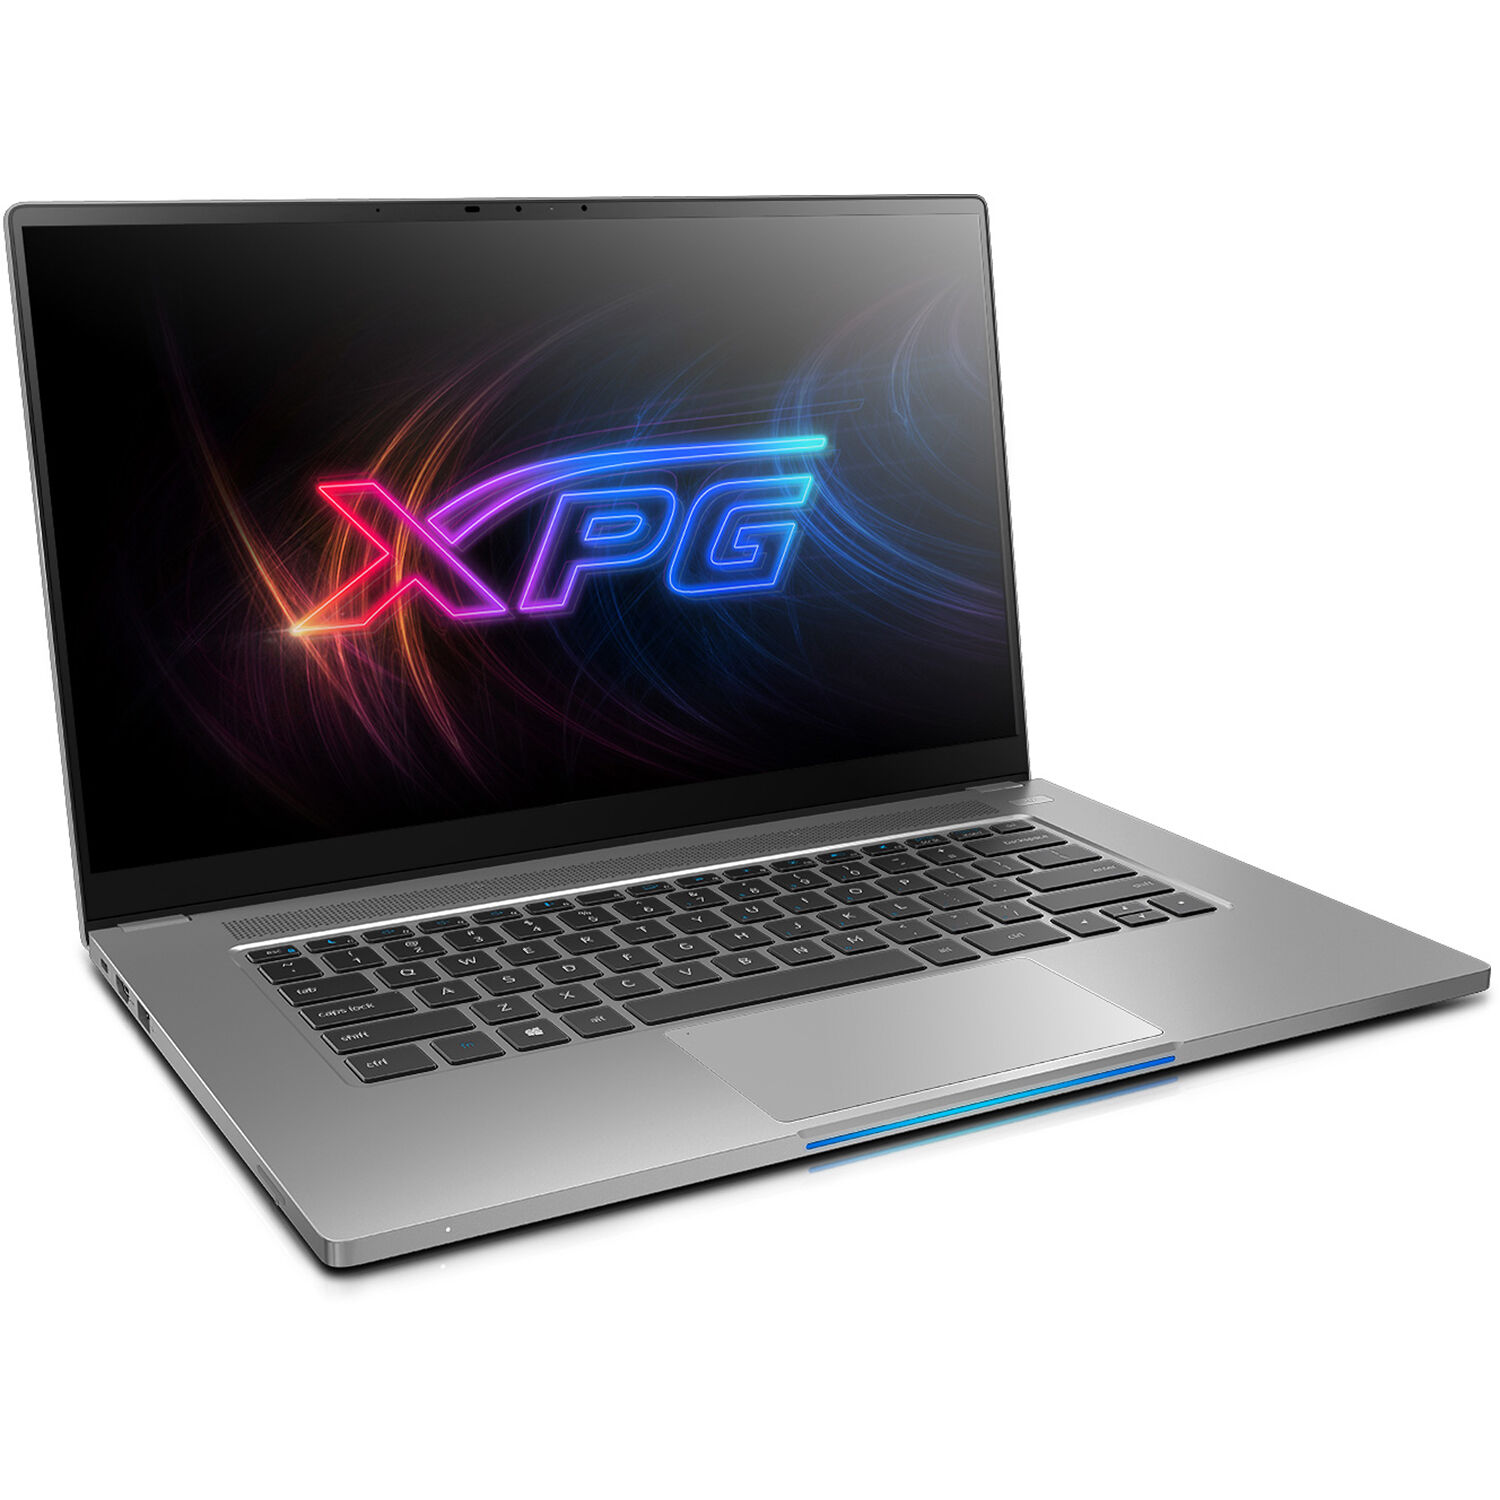 XPG Xenia 15.6" Laptop Intel Core i7 16GBx1 Memory Nvidia GeForce RTX 2070 Max-Q 512GB Gaming Laptop - $1199.00